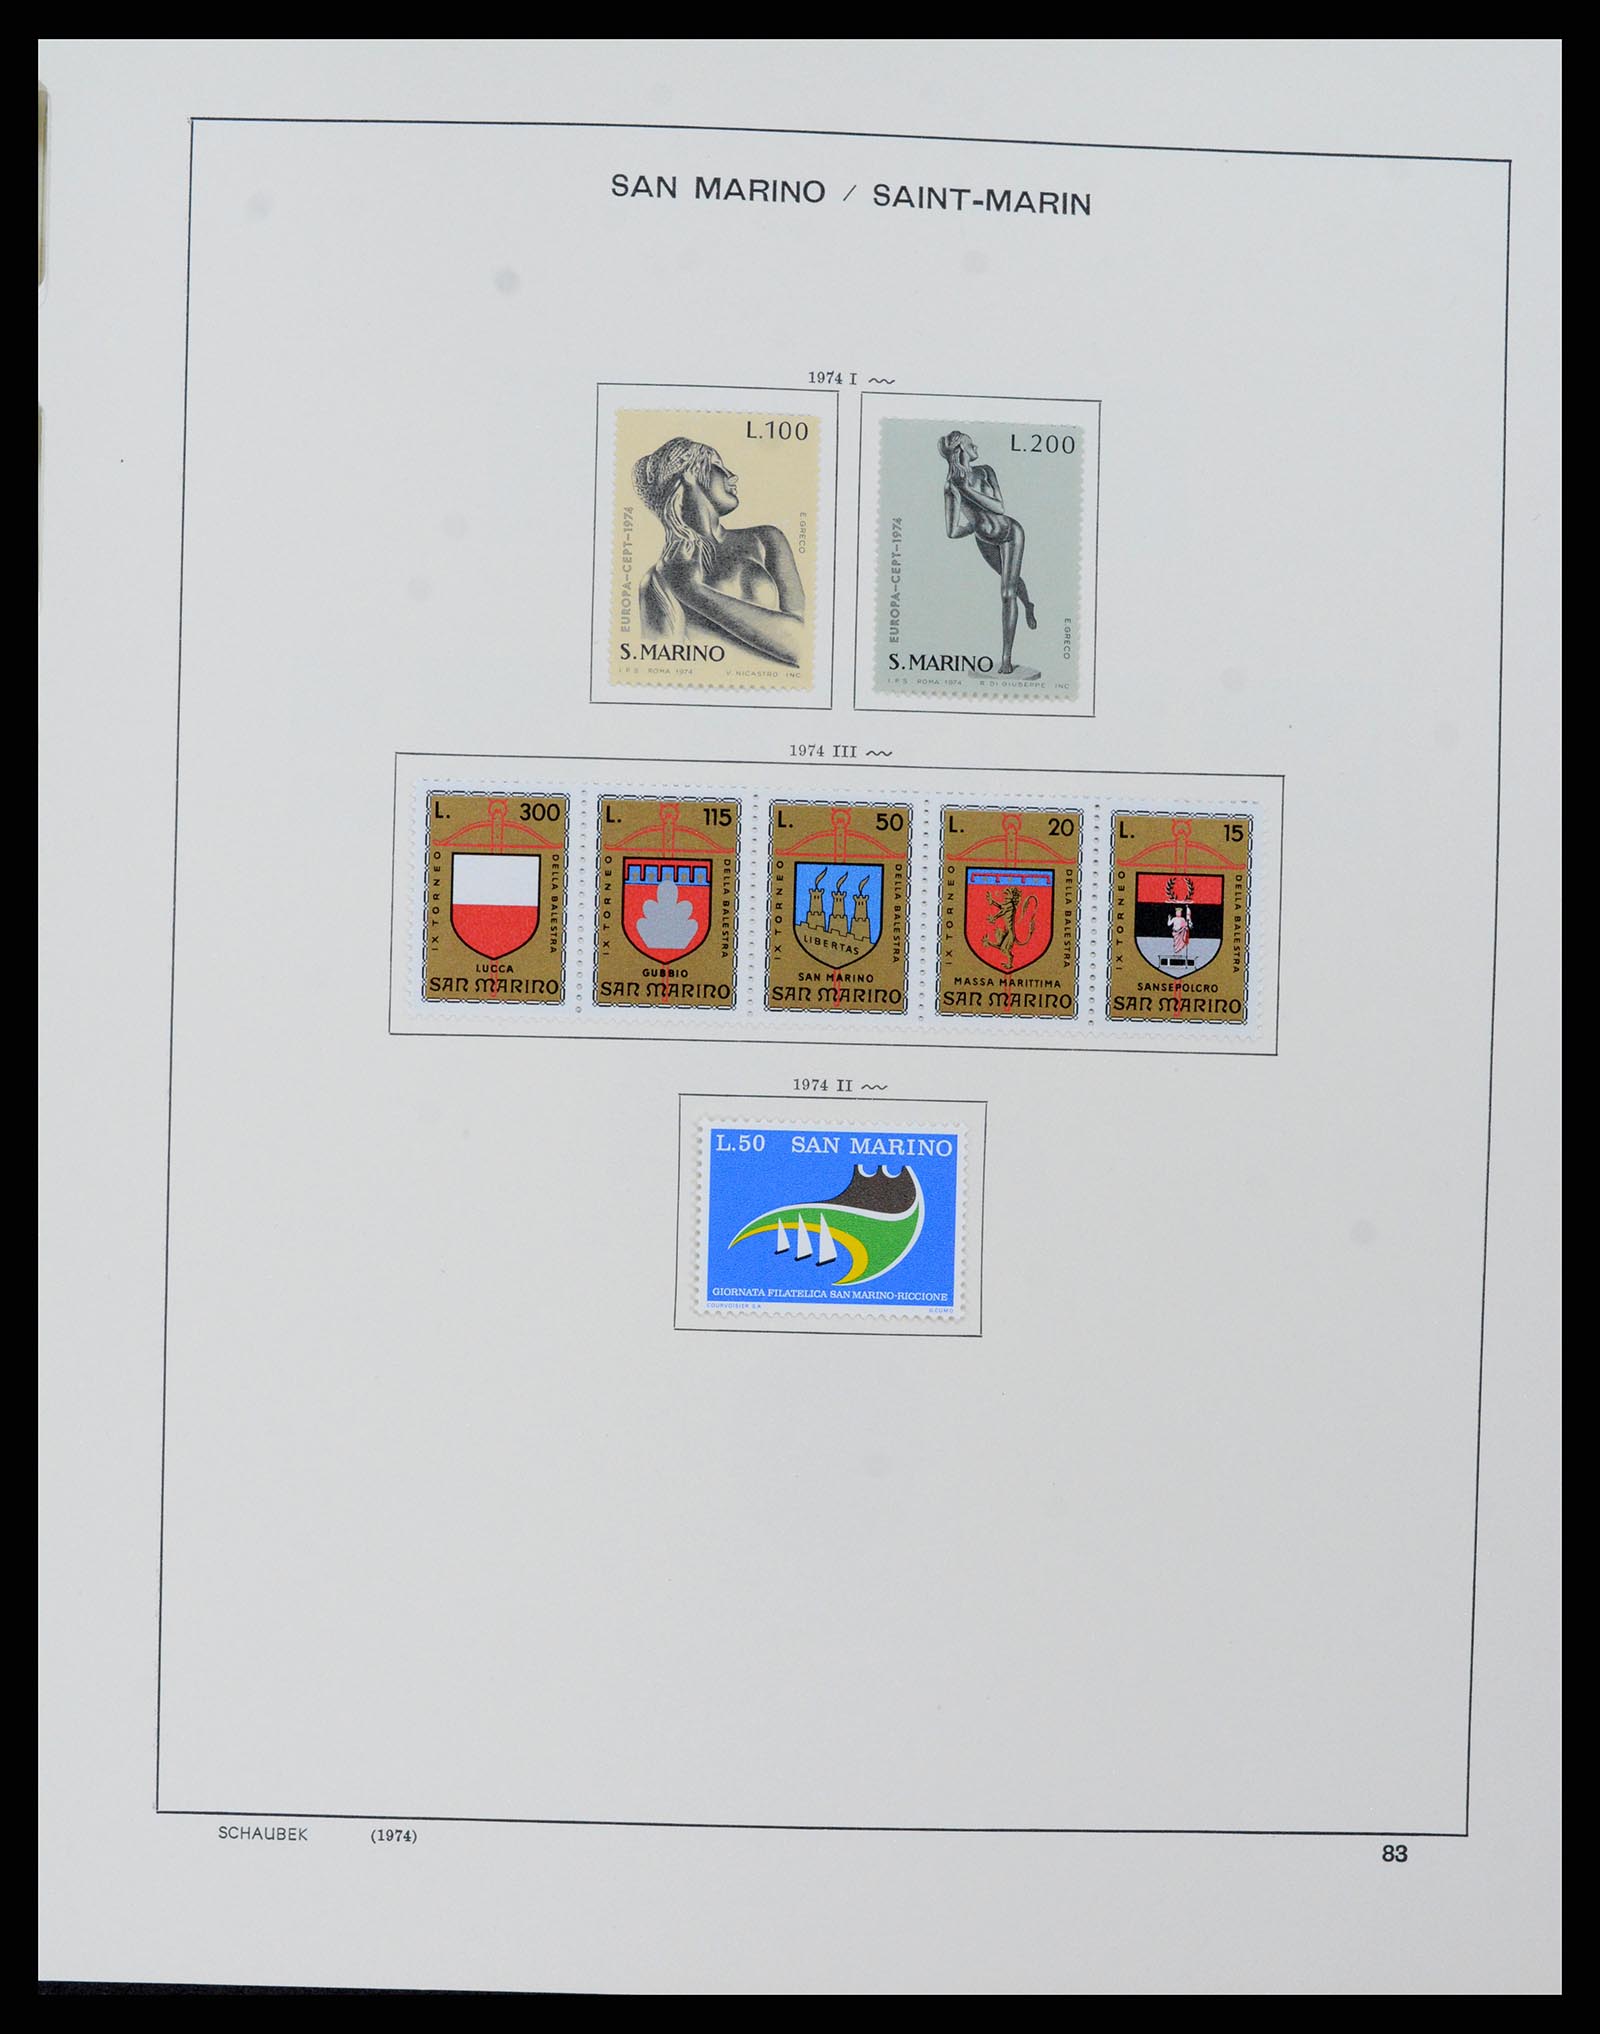 37556 086 - Stamp collection 37556 San Marino 1877-2017.